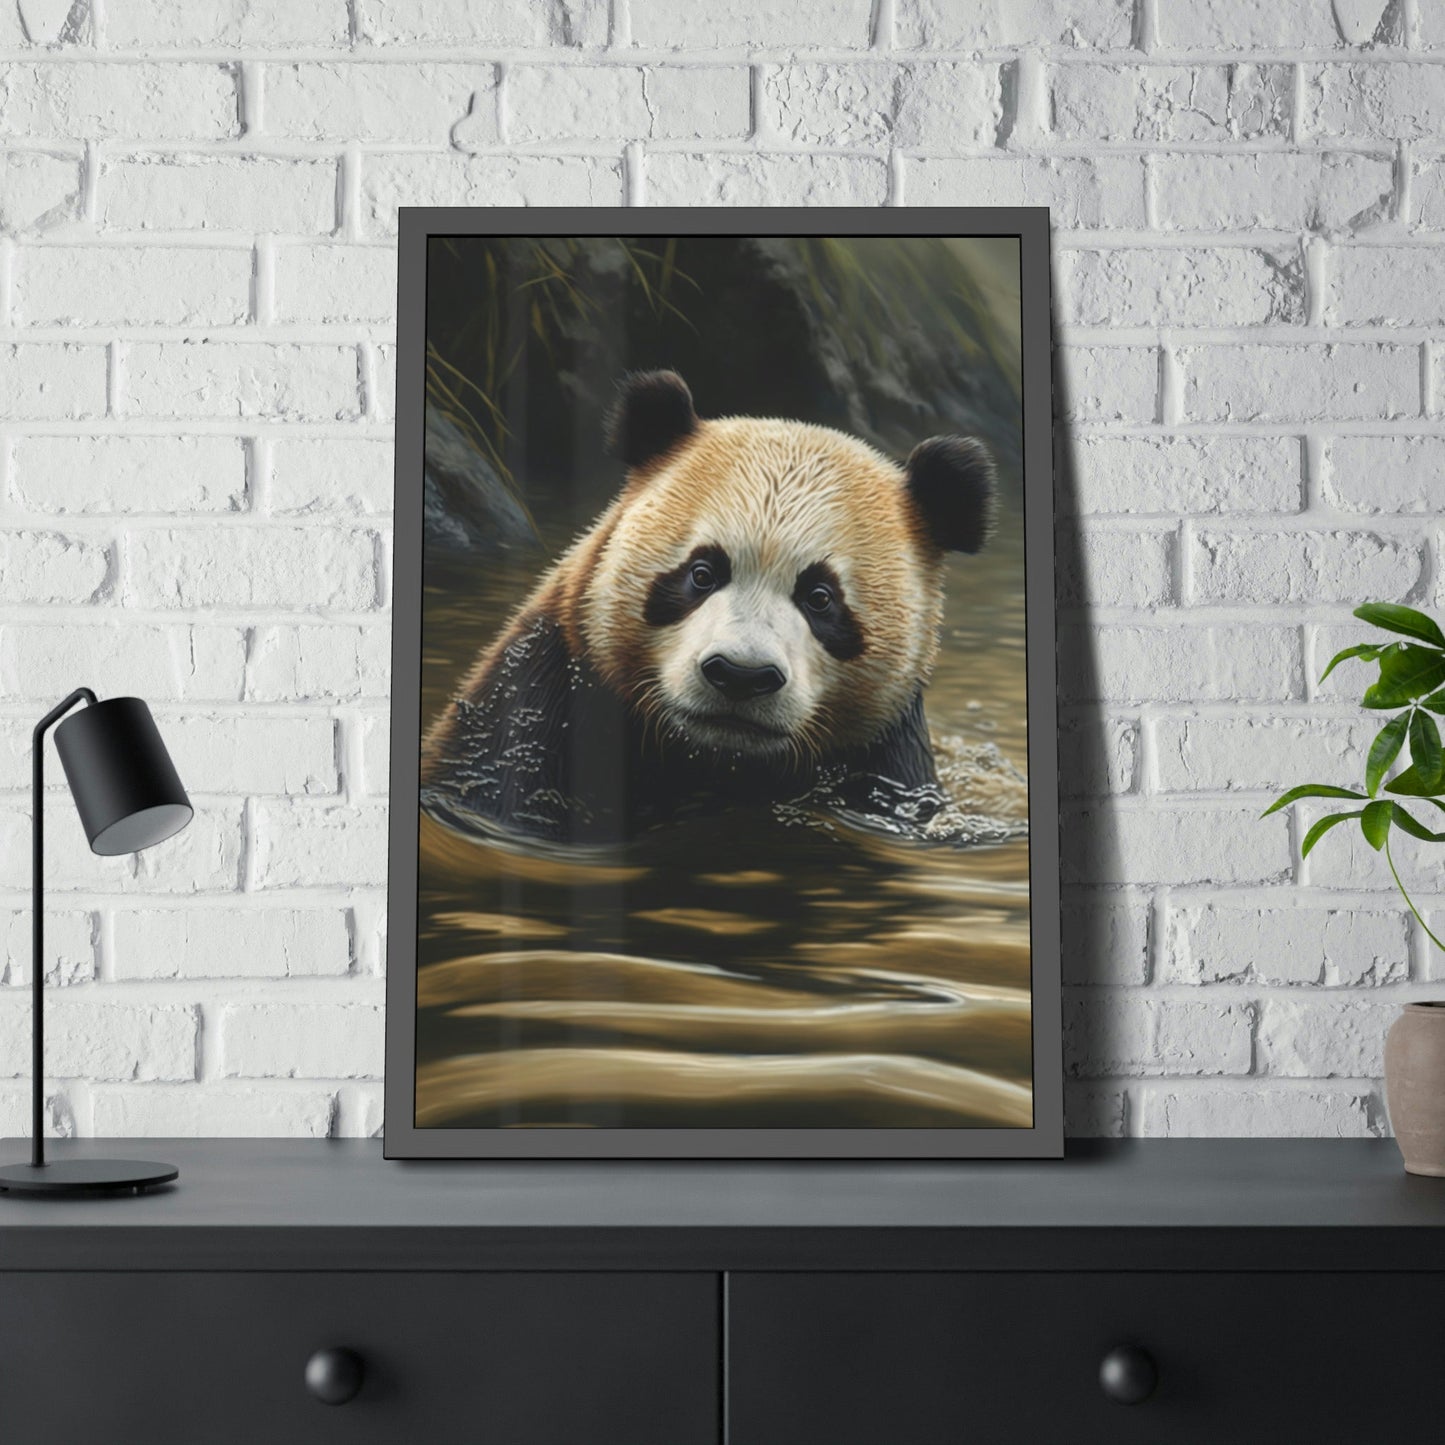 Water Wading Panda: A Serene Scene